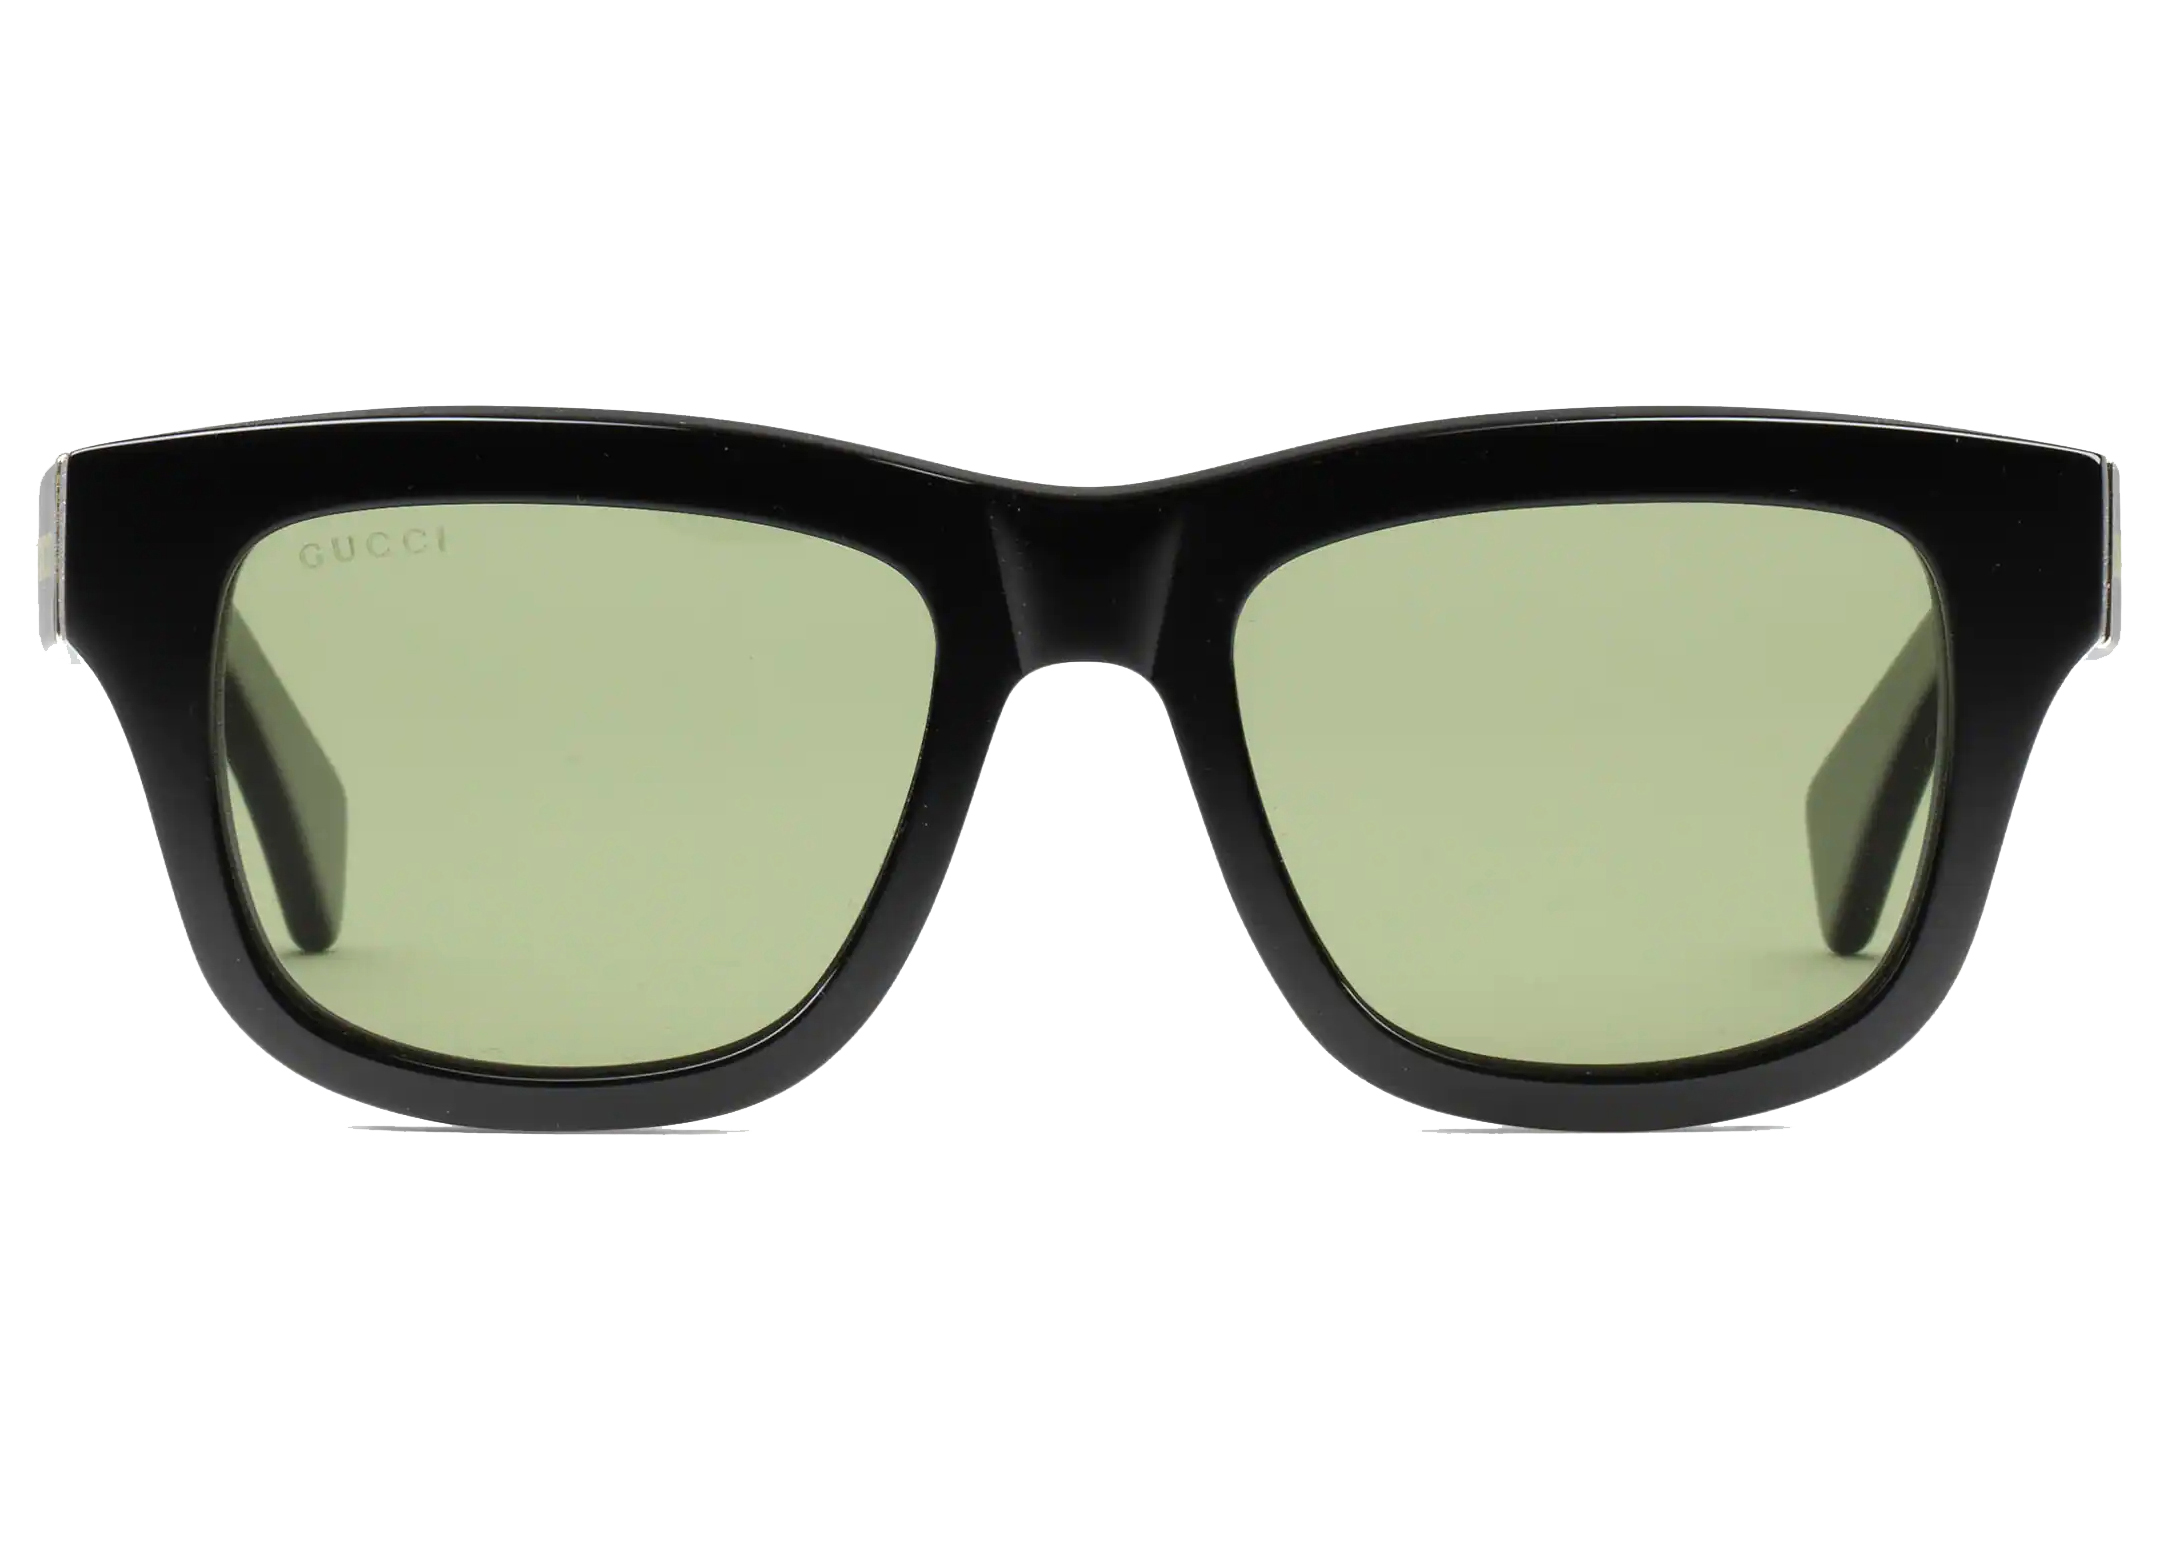 Gucci Rectangular Frame Sunglasses Black/Green (691371 J1696 1030)